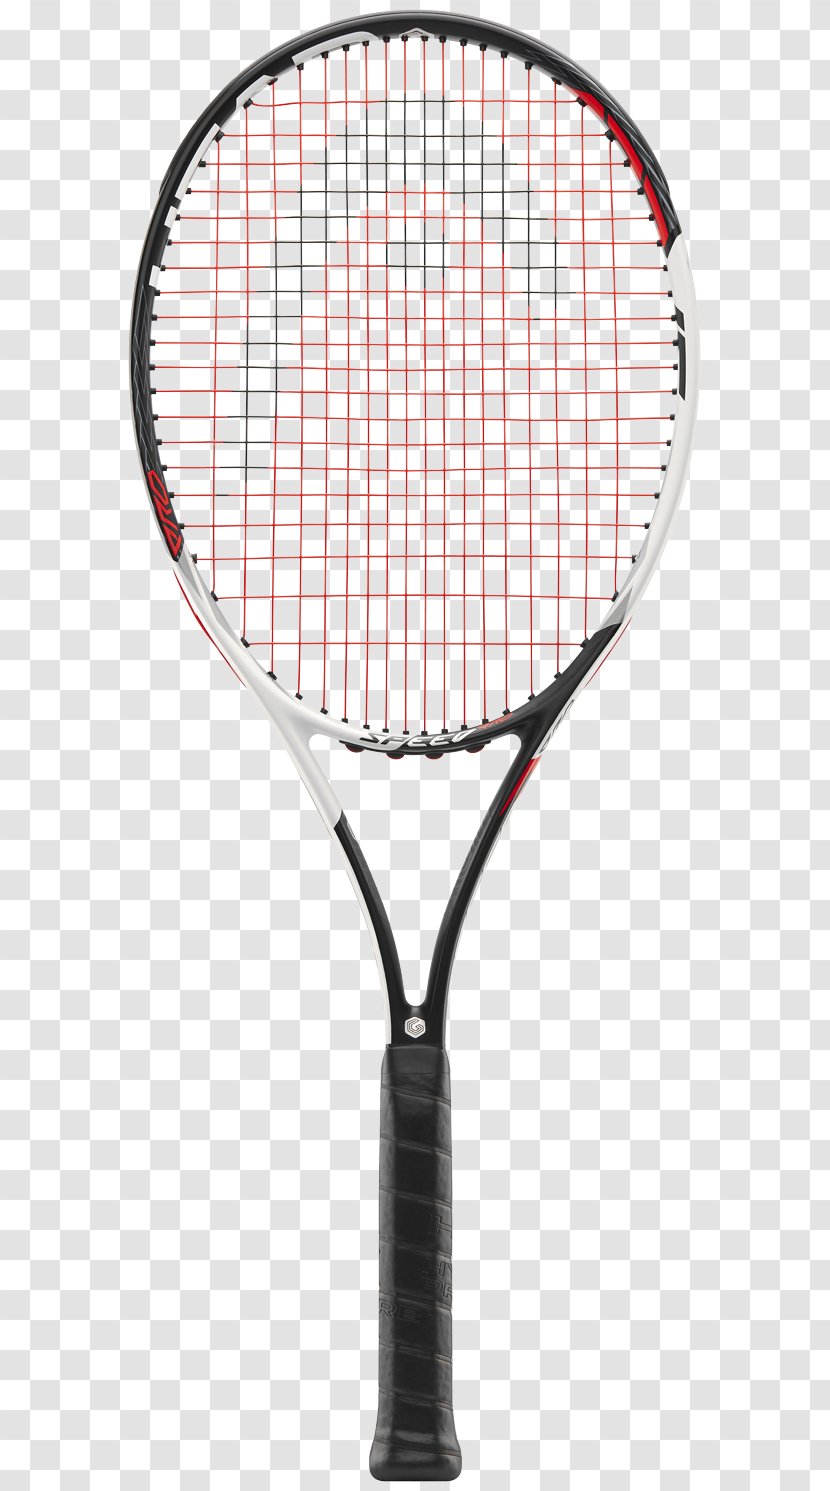 Racket The US Open (Tennis) Prince Sports Rakieta Tenisowa - Tennis Equipment And Supplies Transparent PNG